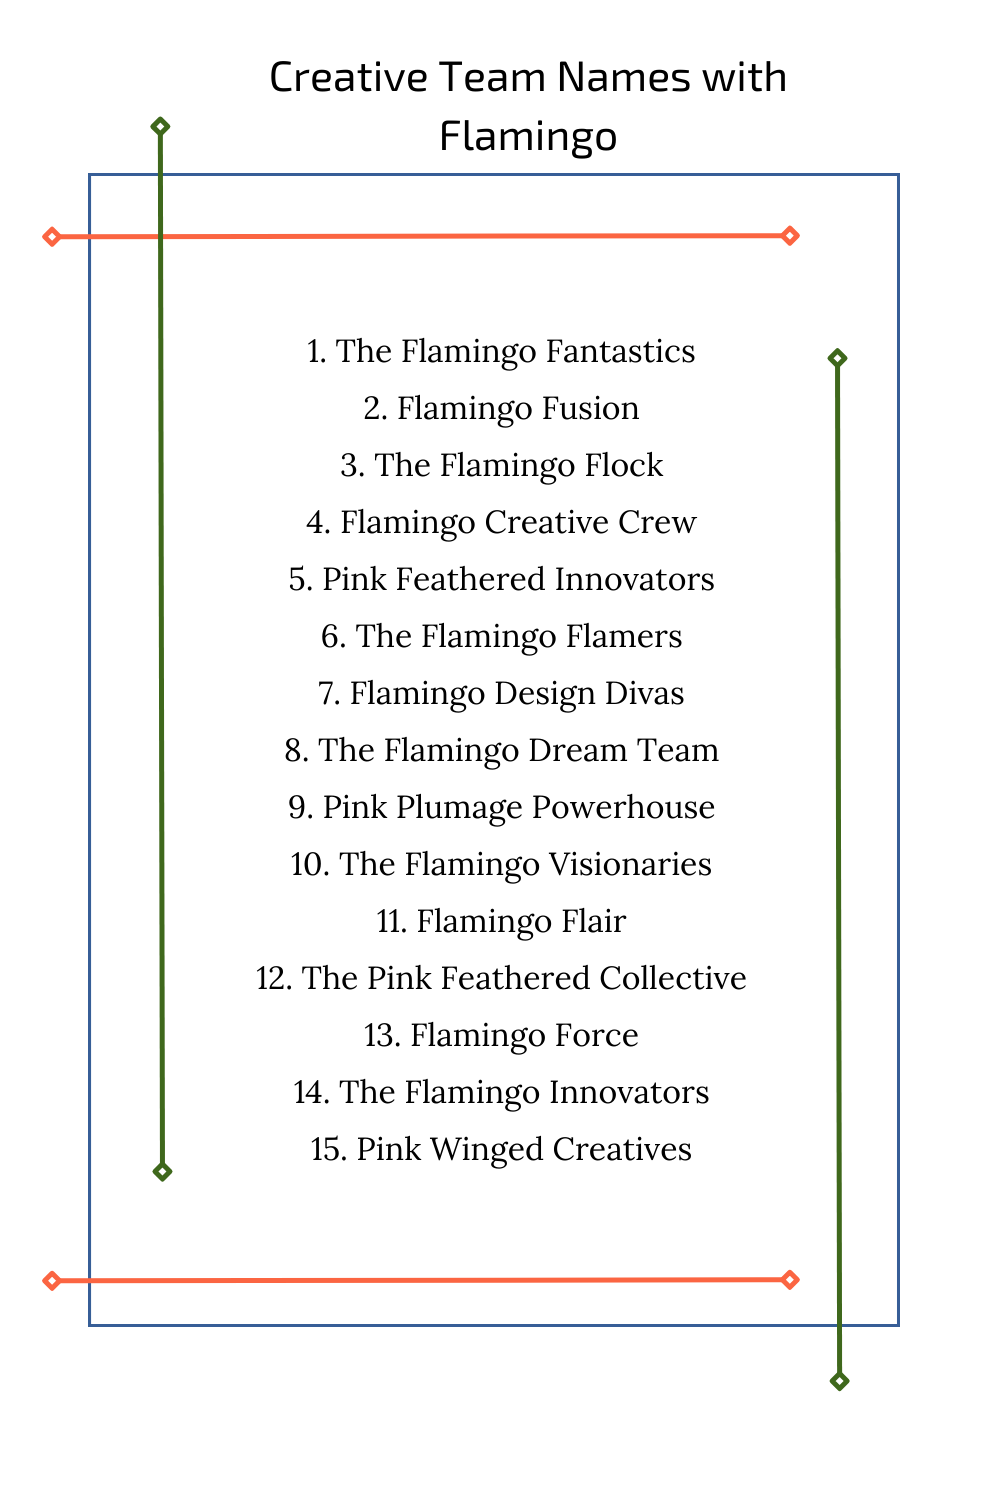 Creative Team Names with Flamingo